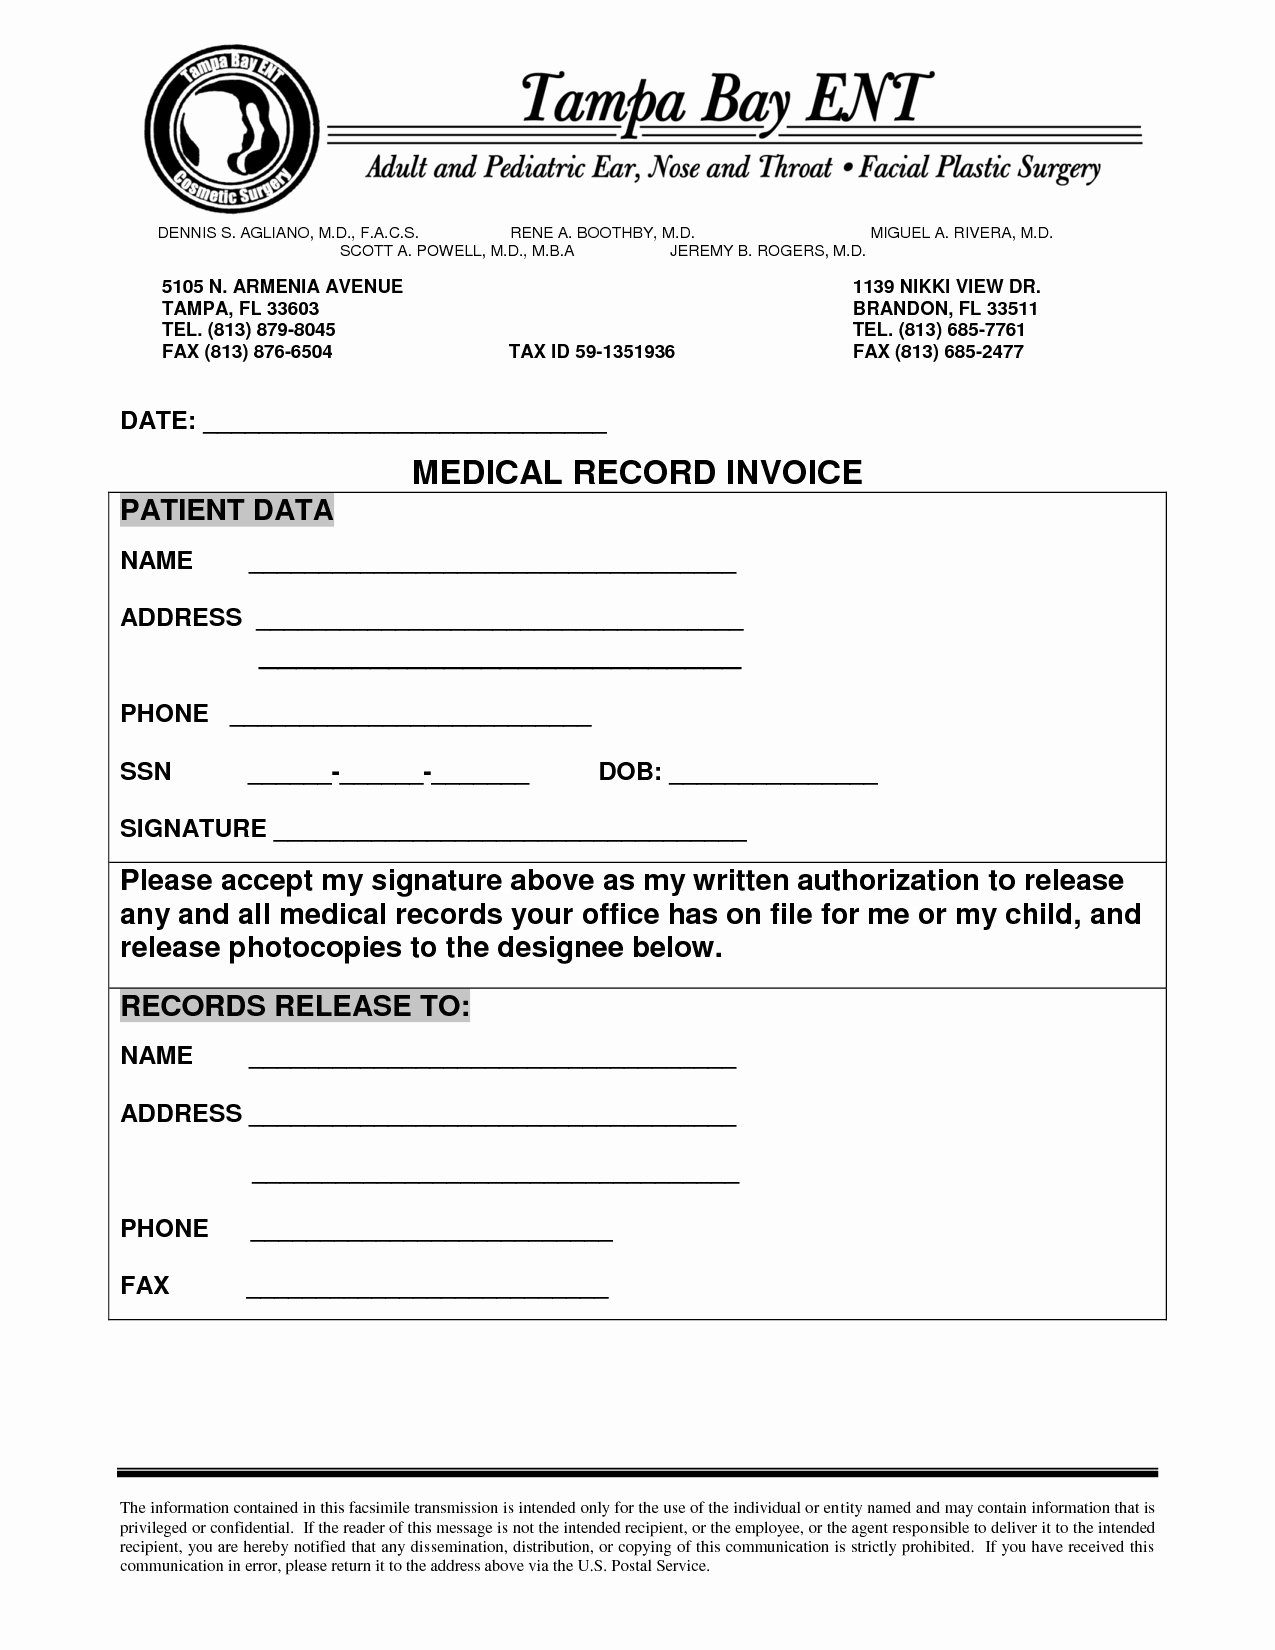 Sample Medical Invoice Invoice Template Ideas